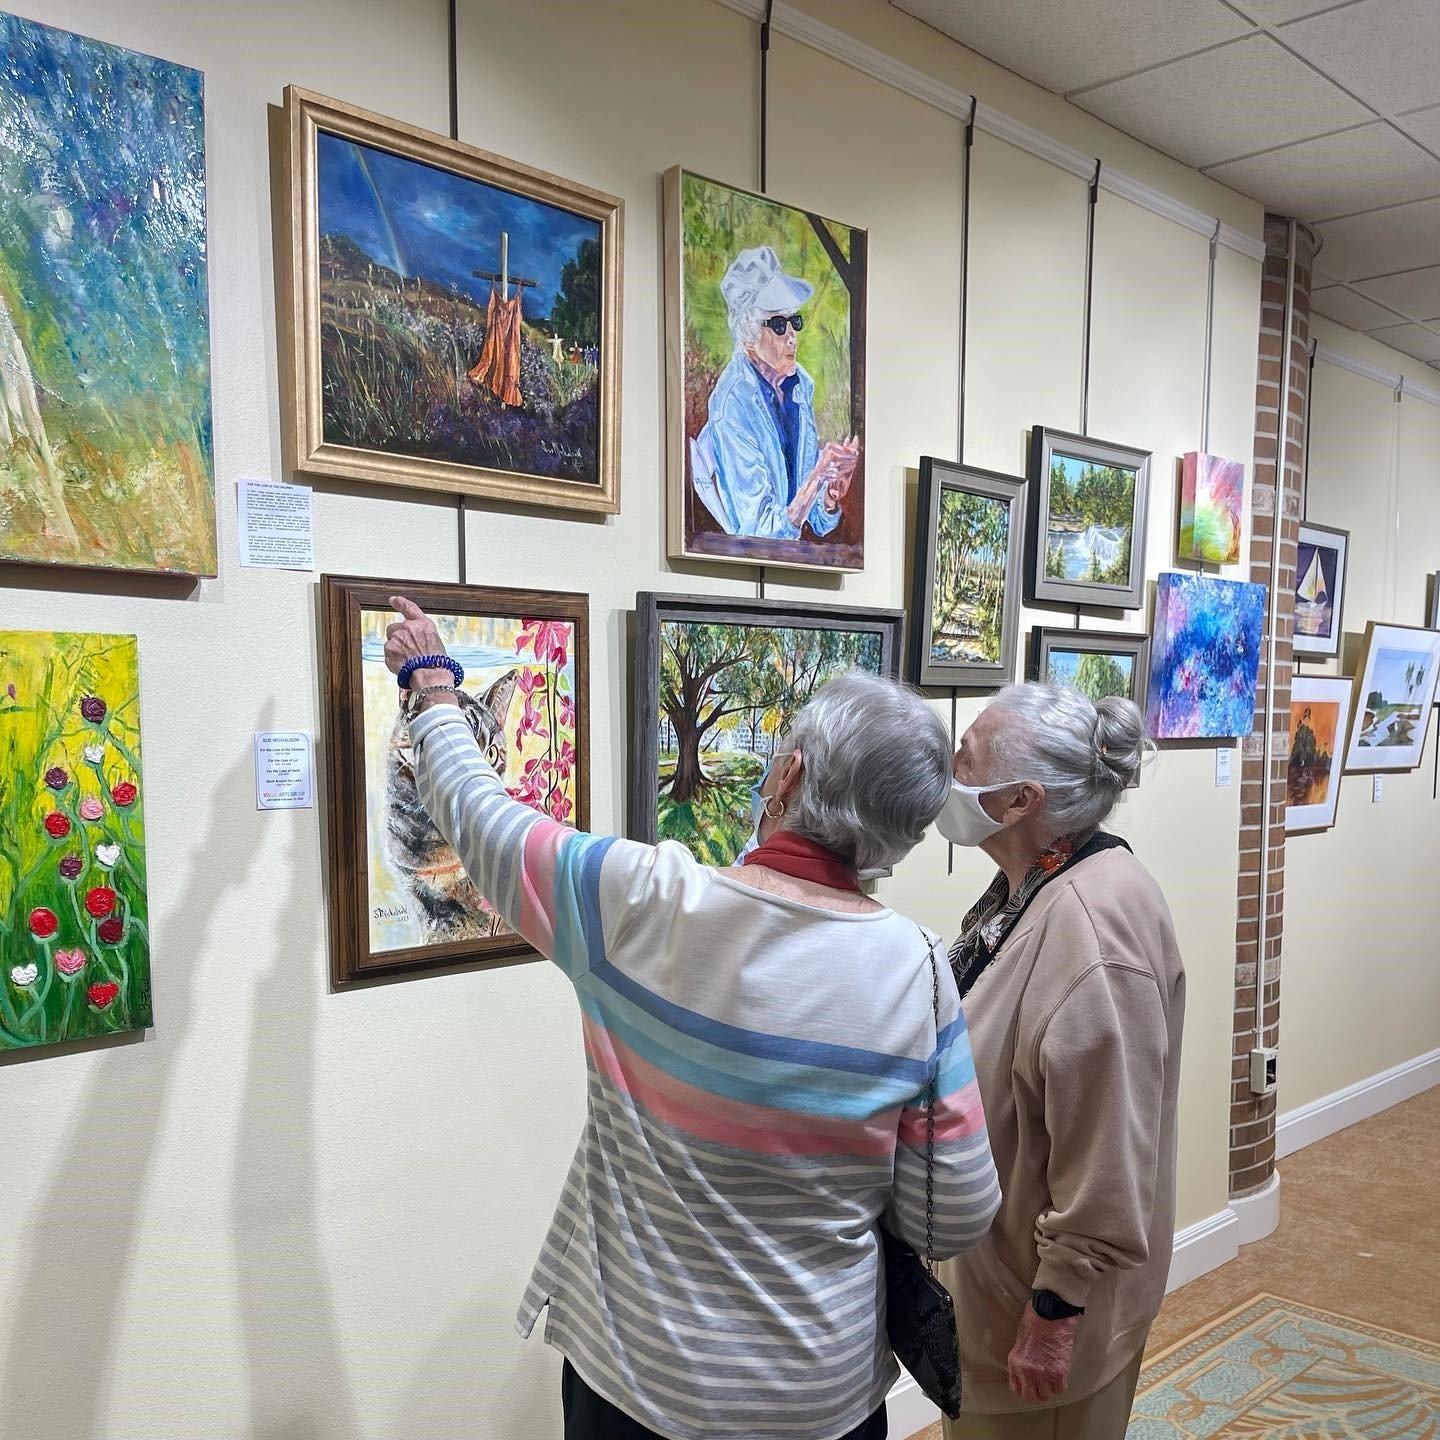 Visitors enjoy the paintings on display at the Cypress Village Visual Arts Show.